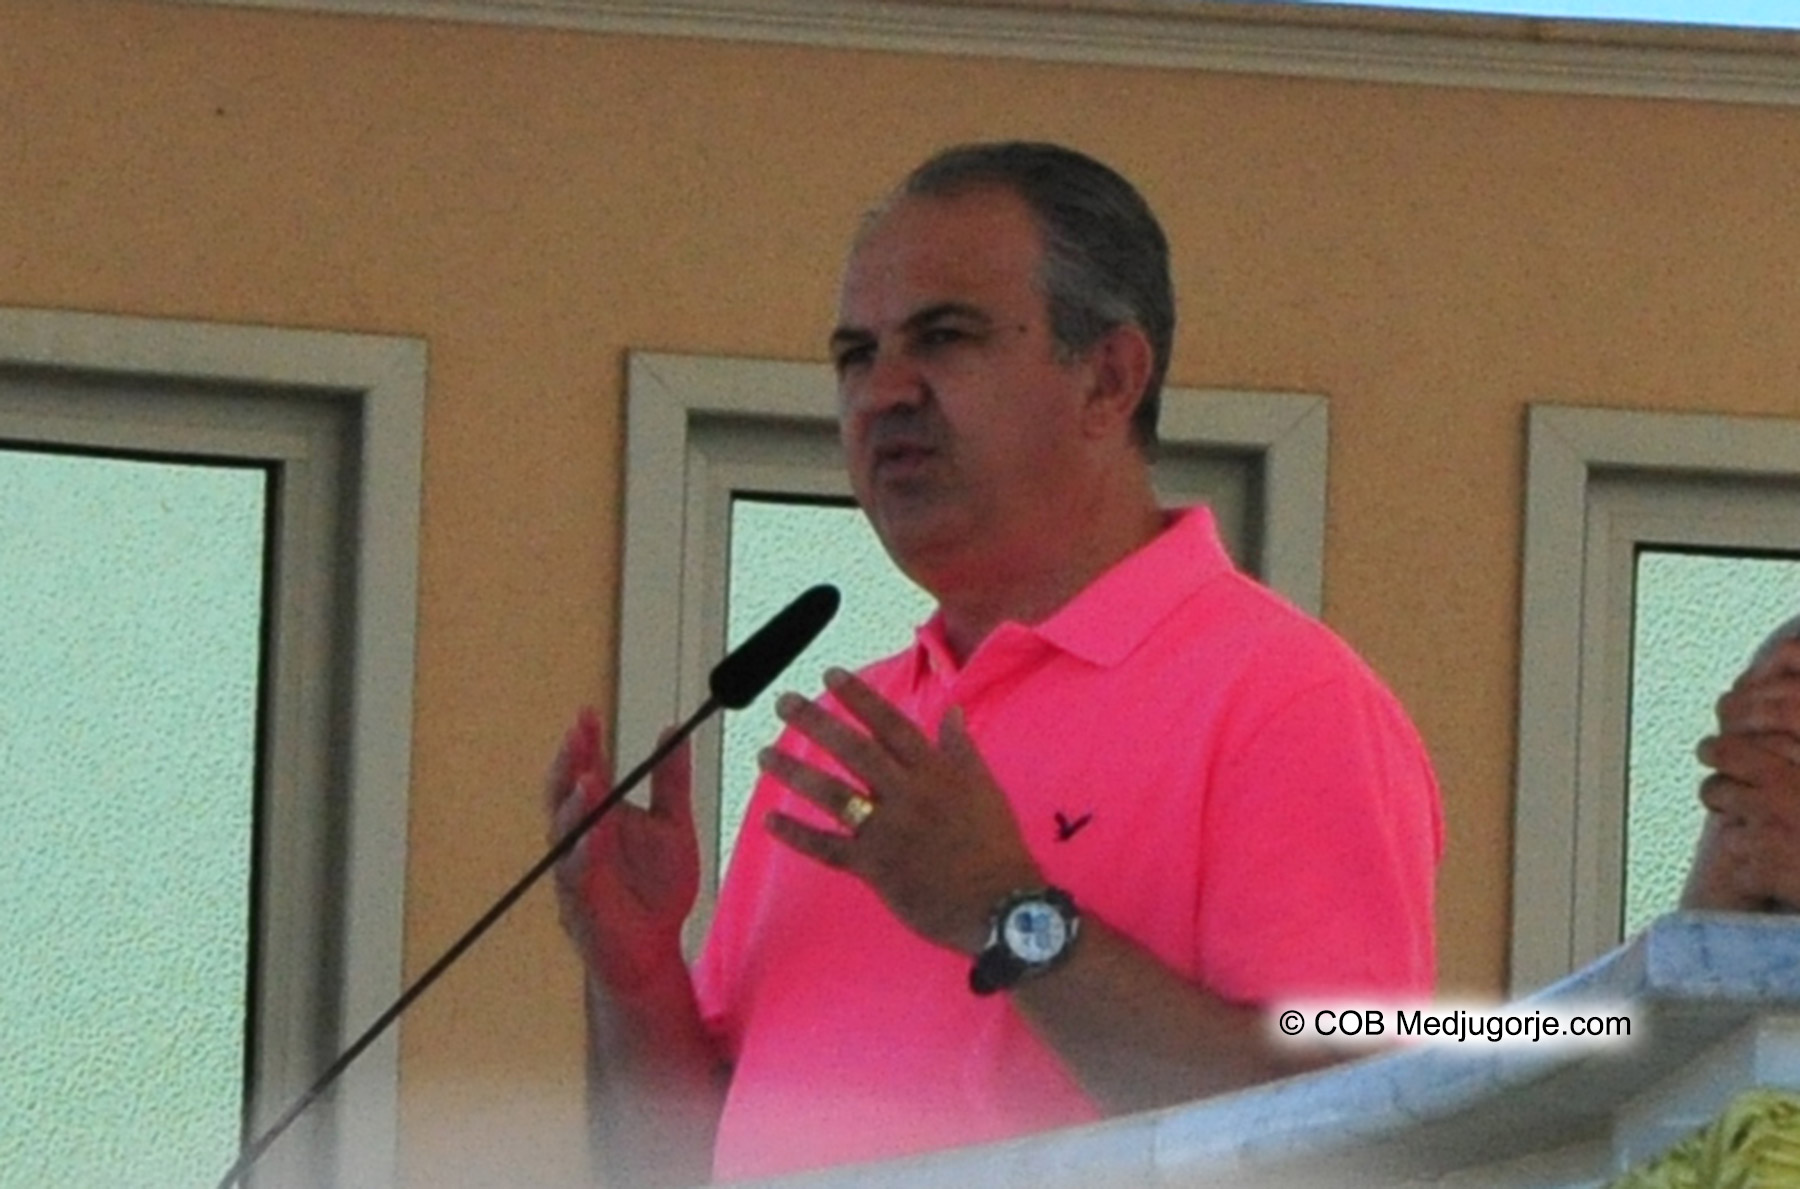 Medjugorje Ivan speaking to Pilgrims June 6, 2012